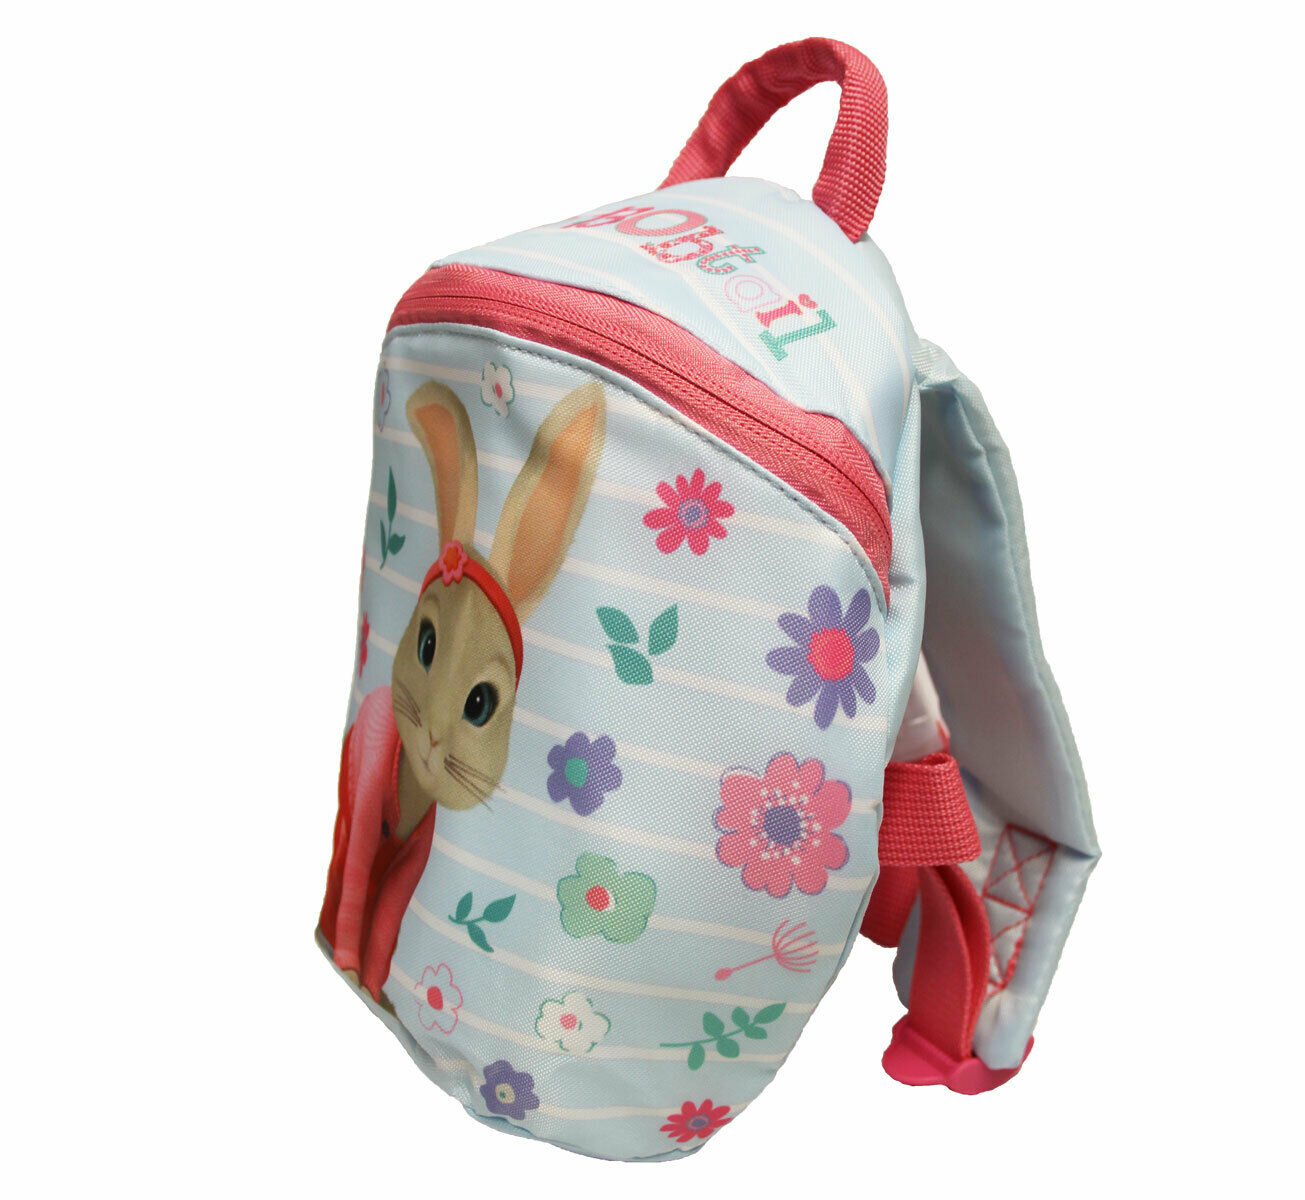 Peter Rabbit Girls Toddler Backpack with Reins School Bag Rucksack